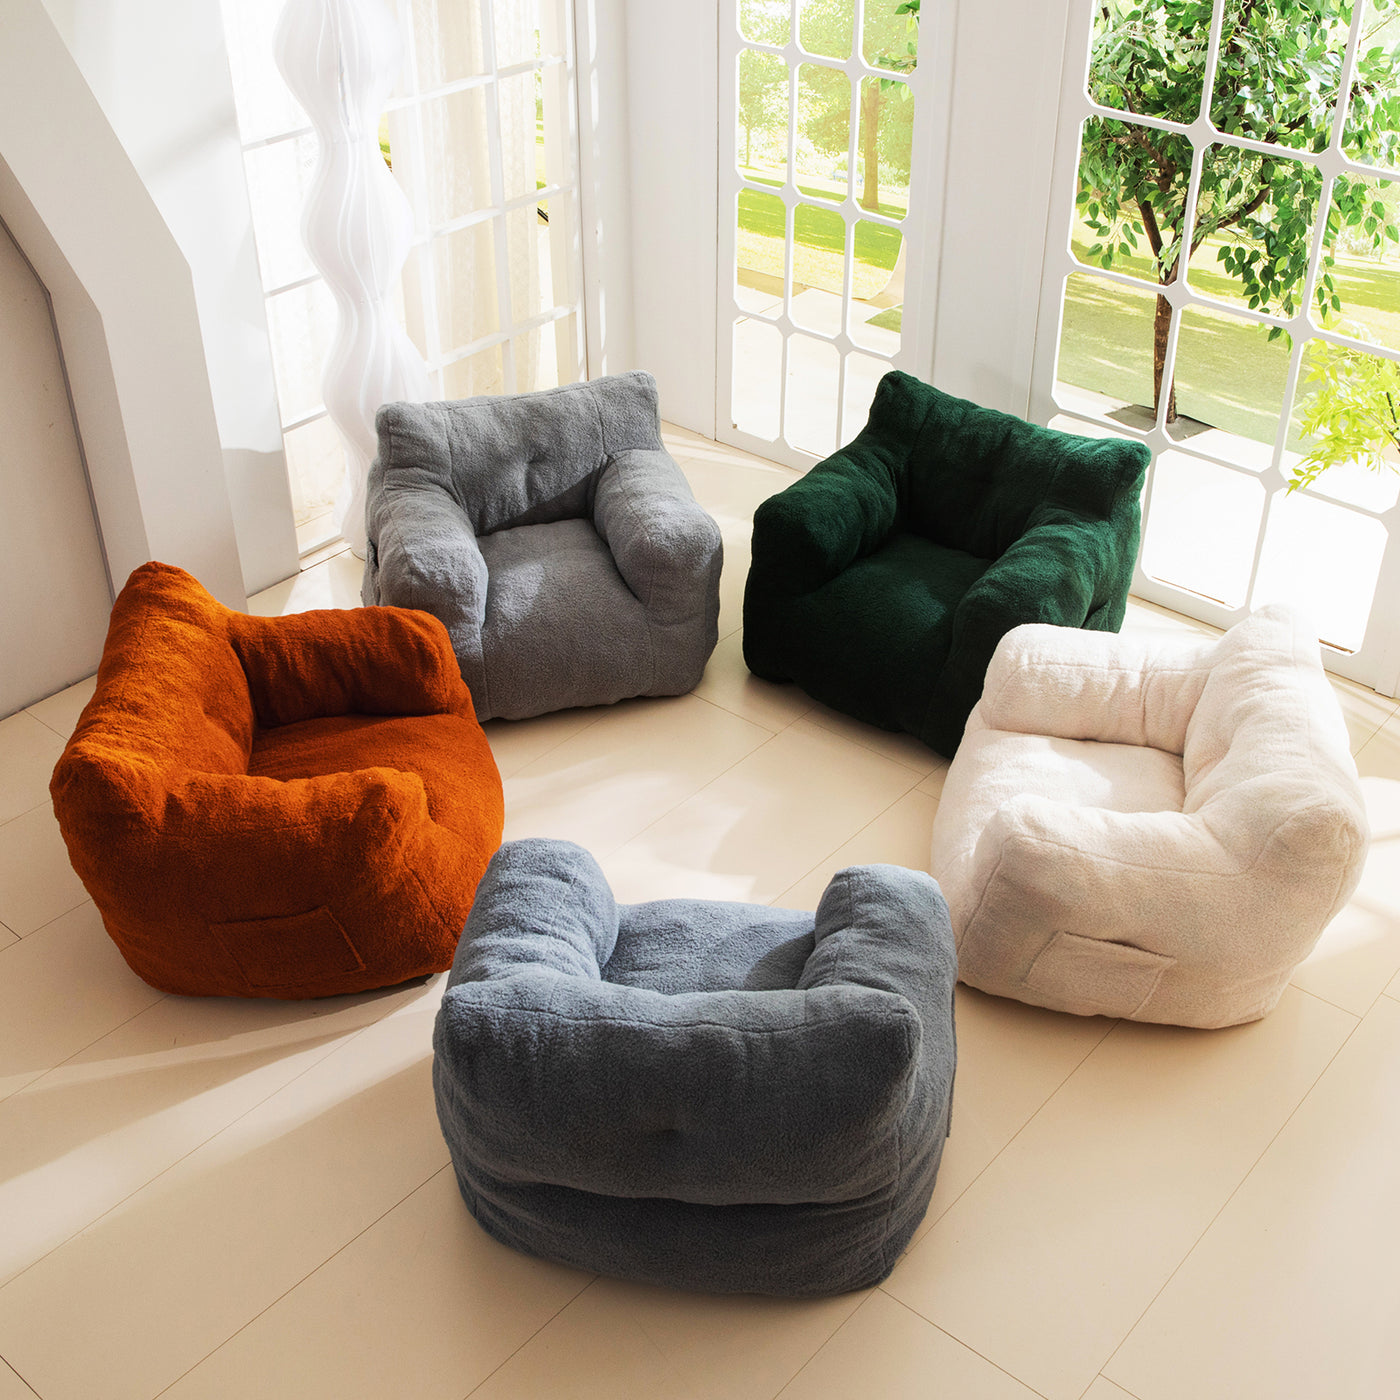 MAXYOYO Sherpa Bean Bag Chair, Boucle Tufted Bean Bag Couch, Living Room Bean Bag Lazy Sofa for Adults Kids, Beige